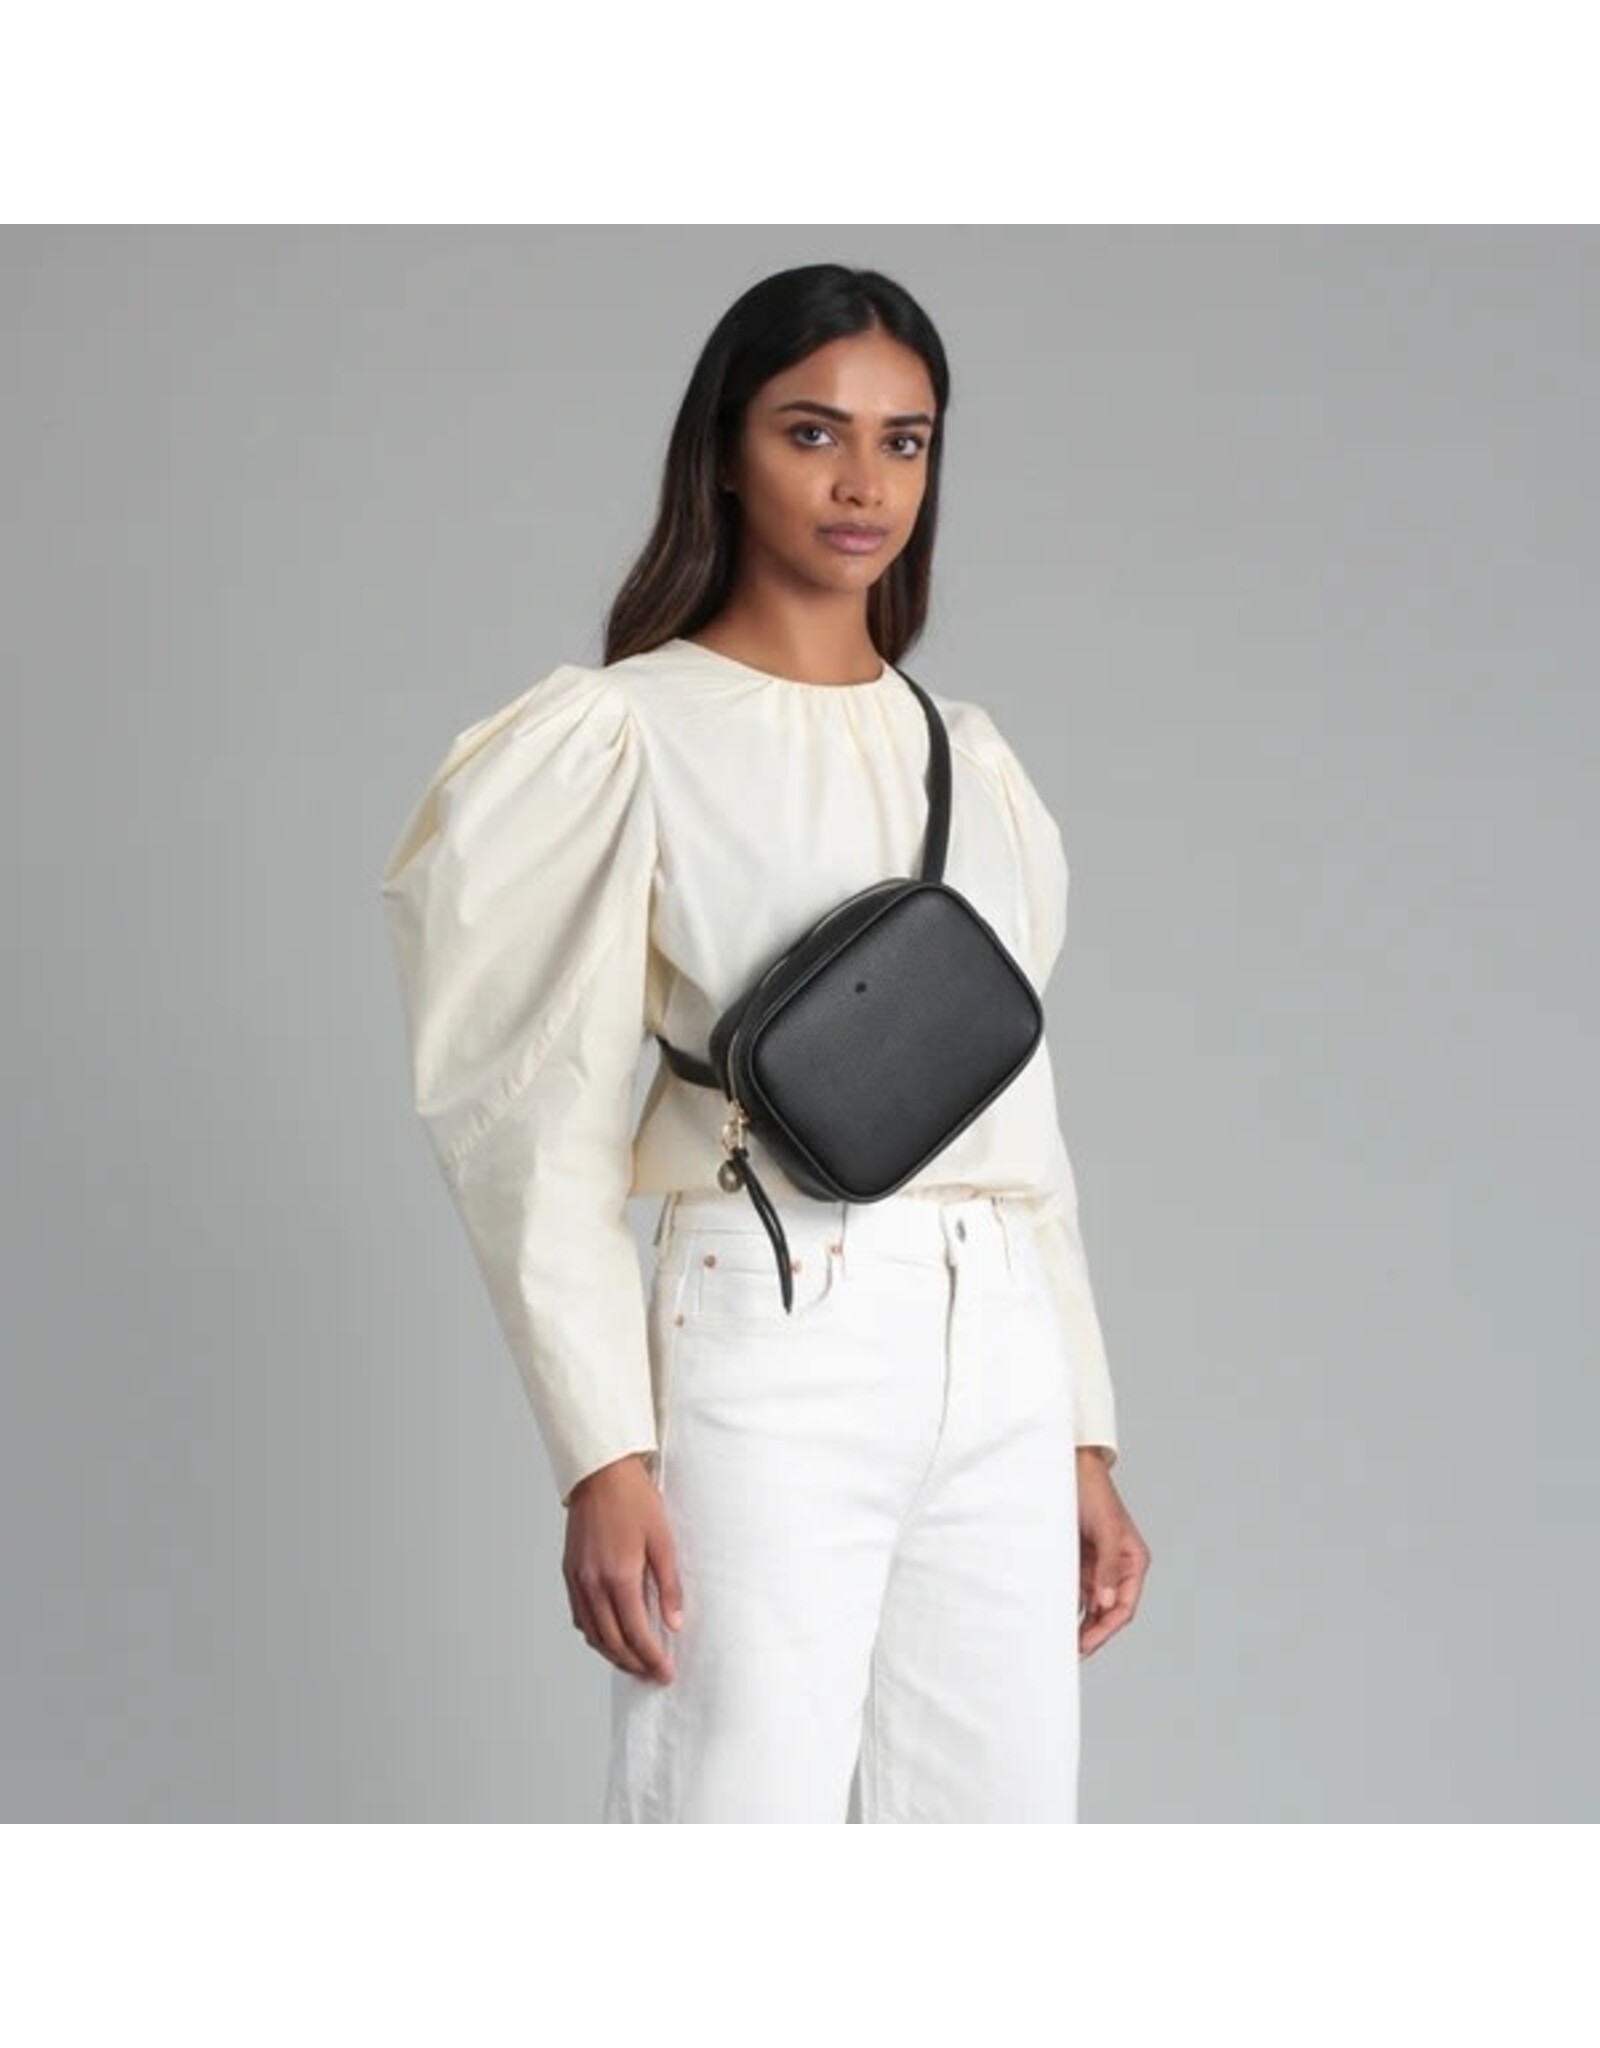 Ela - Belt Bag S / Black